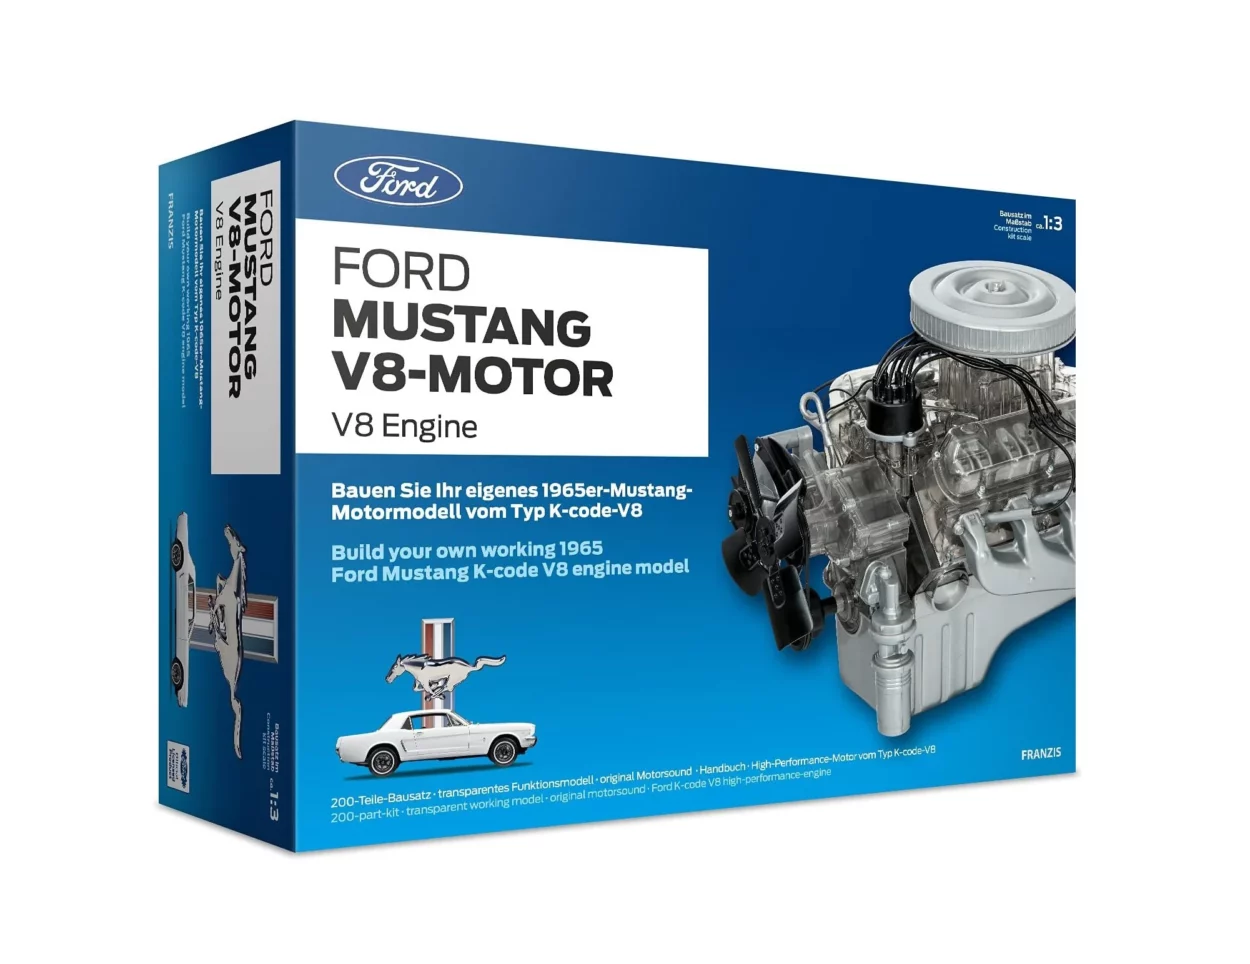 Kit Motore Mustang V8 in scala 1:3